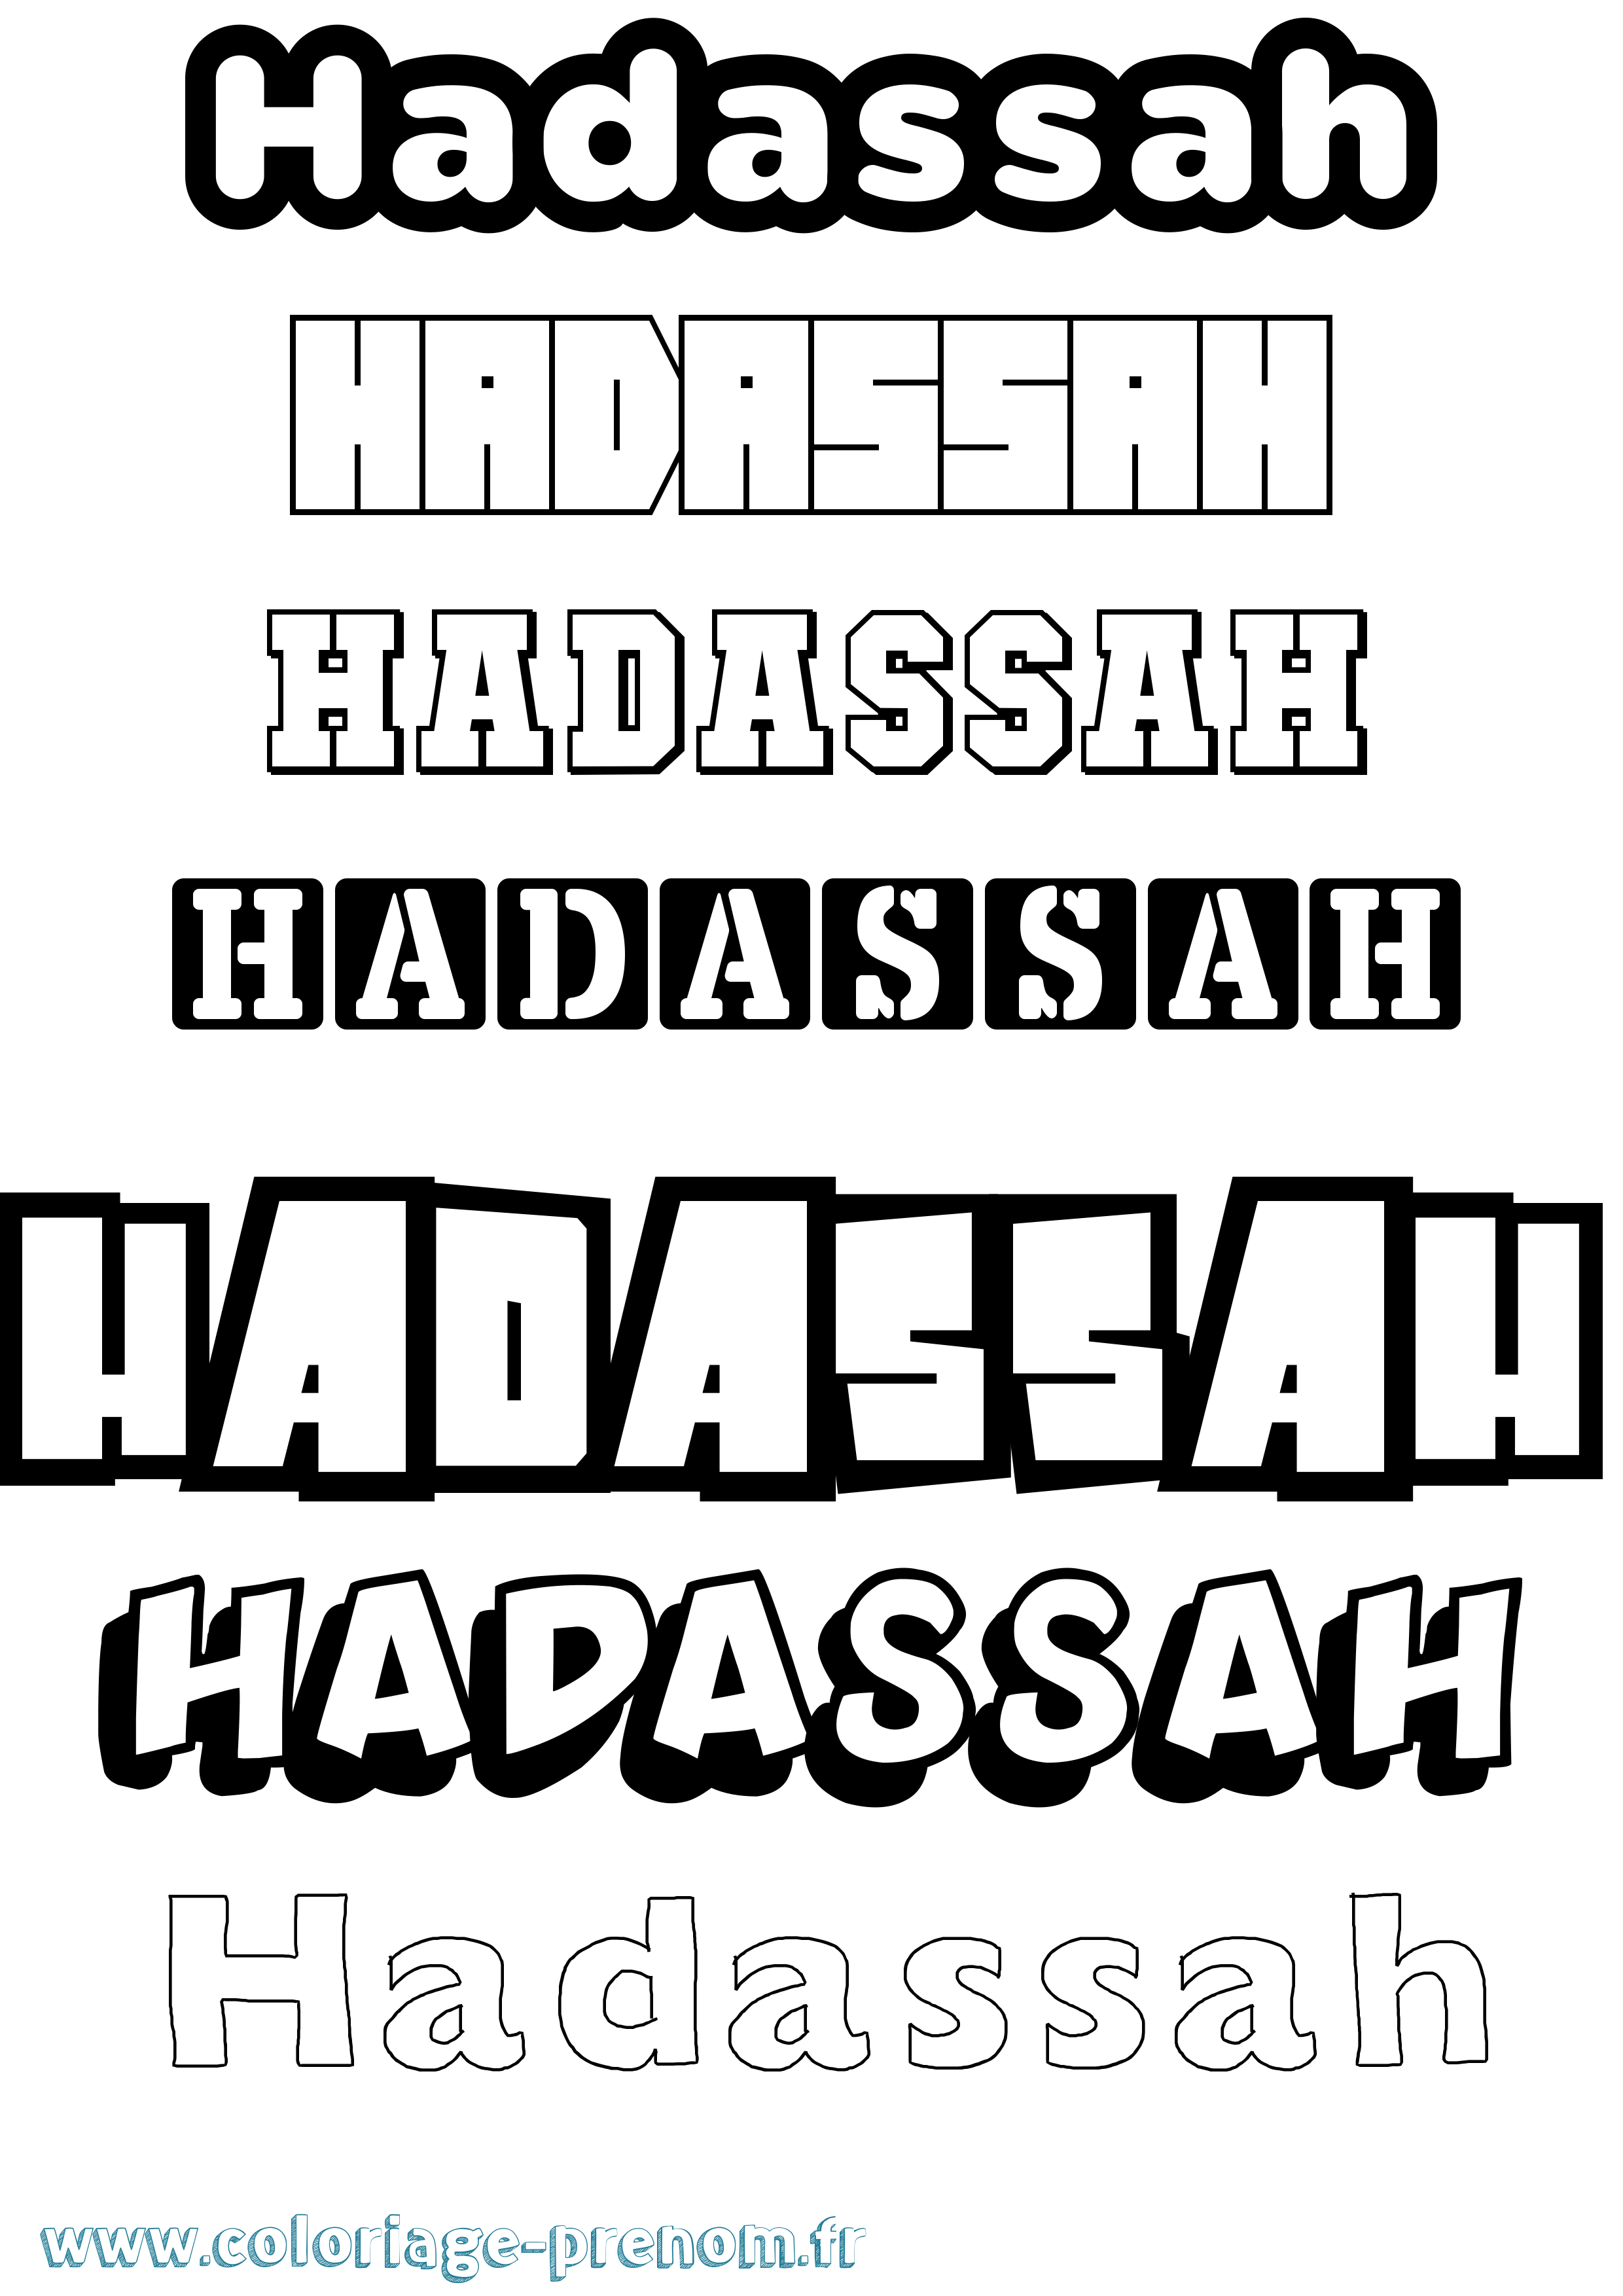 Coloriage prénom Hadassah Simple